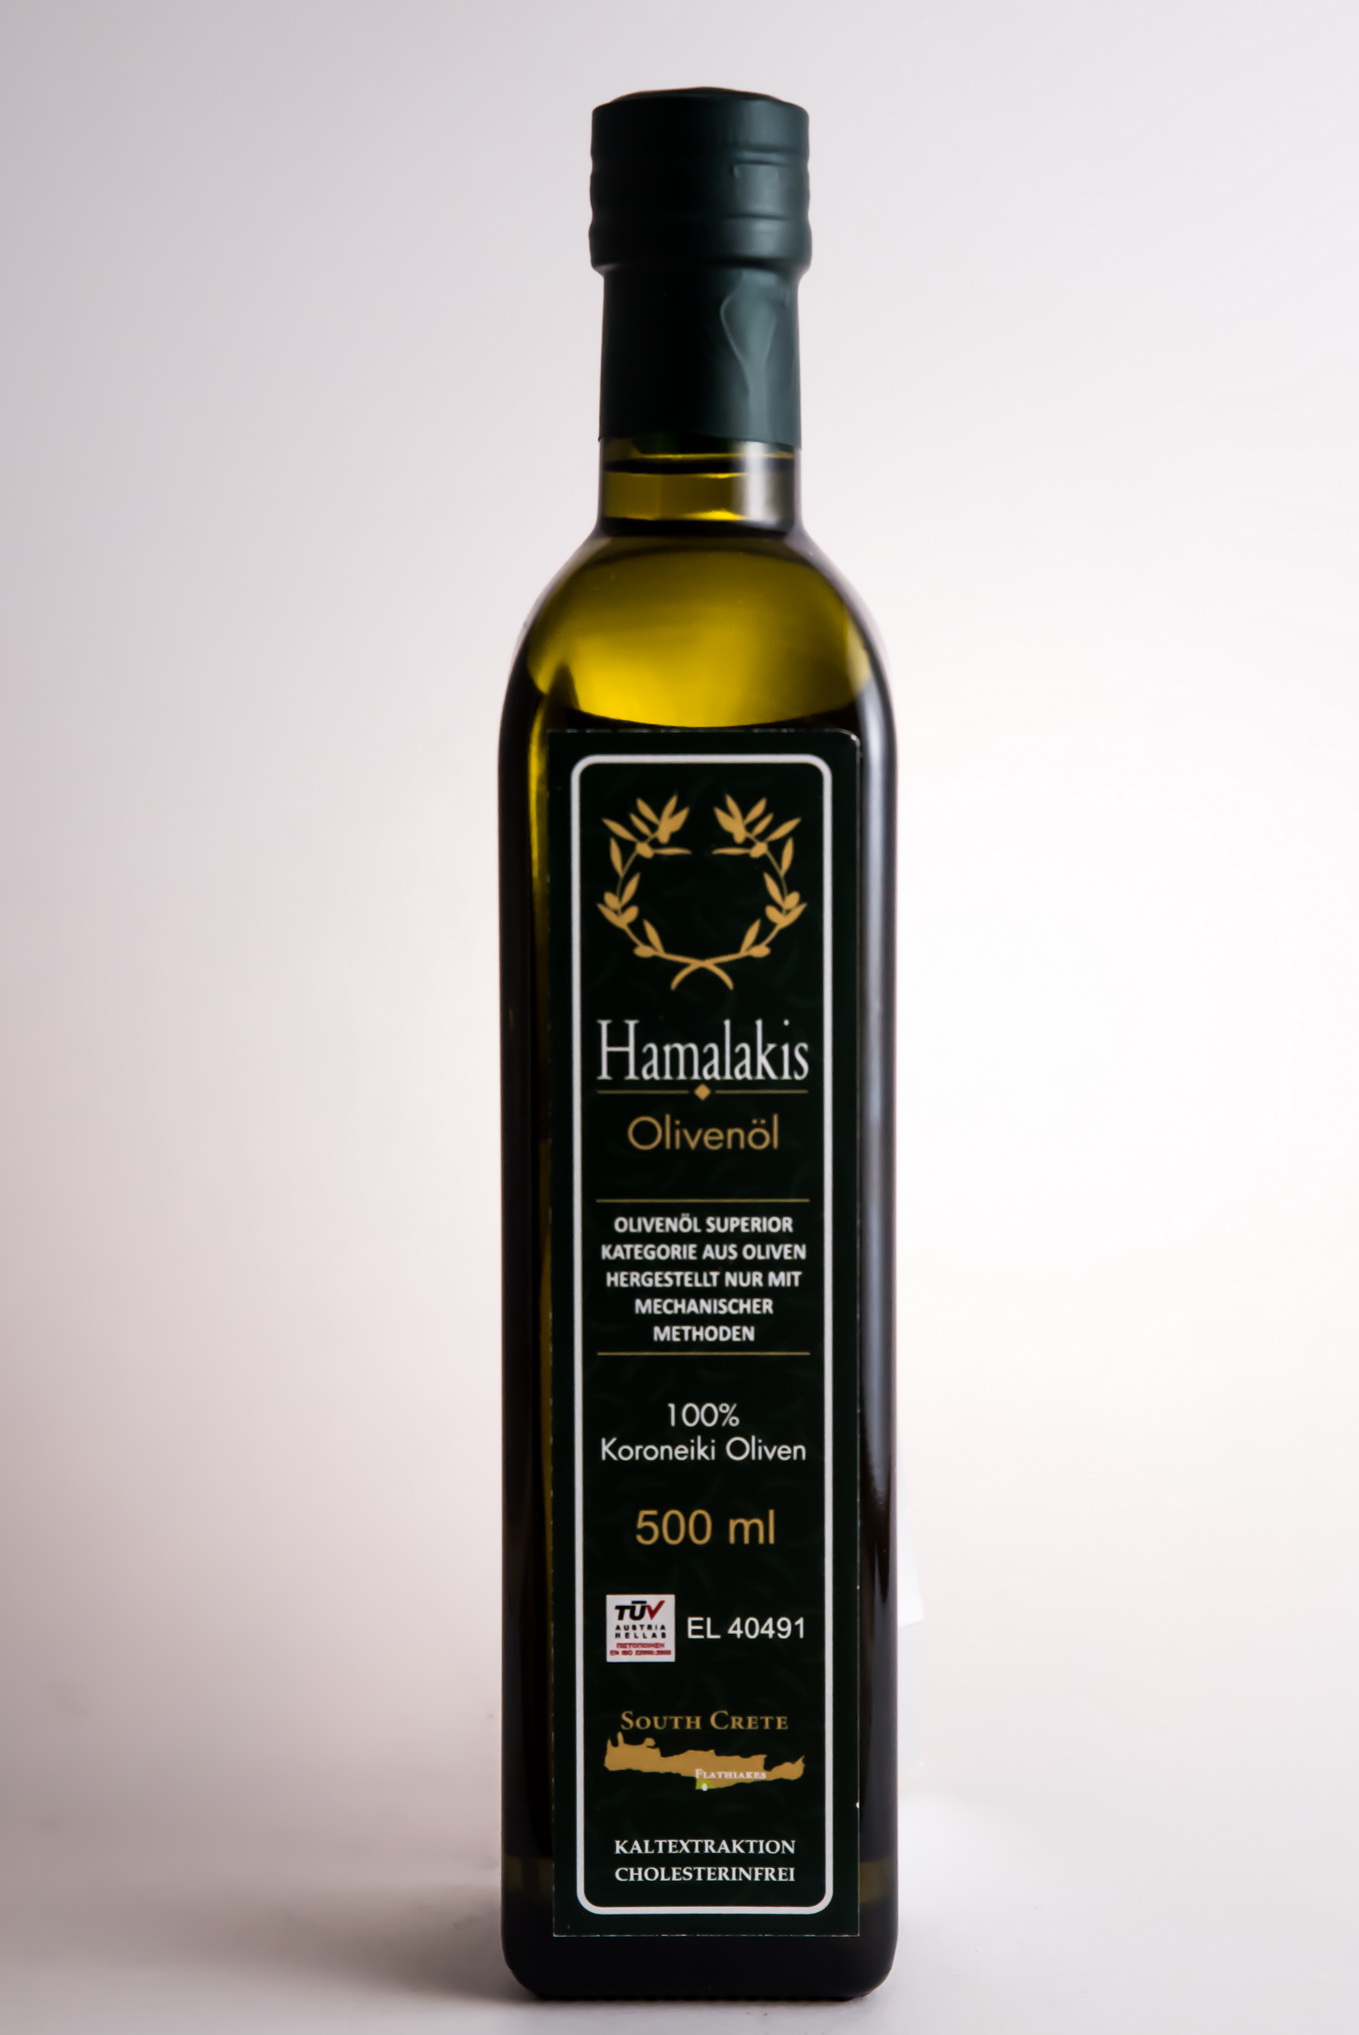 Греческое оливковое масло купить. Масло оливковое hamalakis. Испанское оливковое масло Лоренцо. Масло grek оливковое Greek. Prisma греческое оливковое масло.